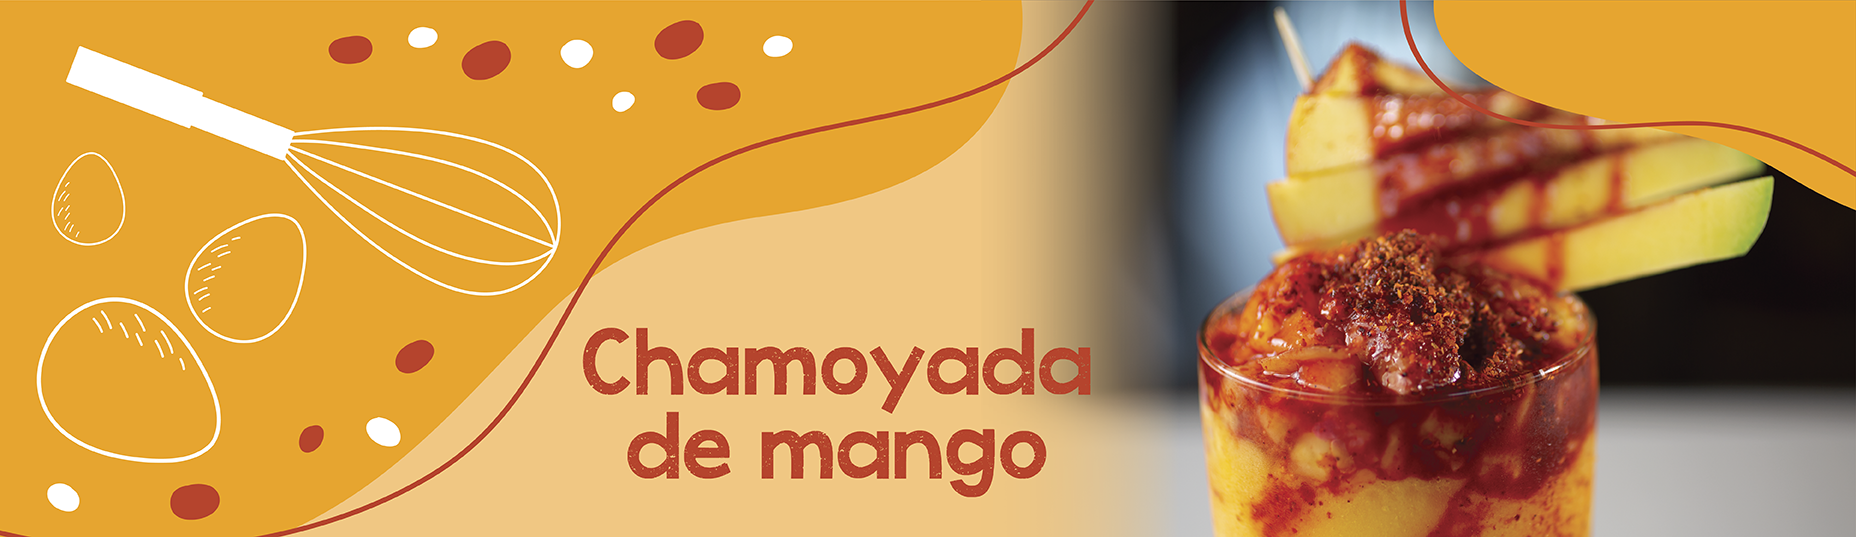 Chamoyada de mango saludable